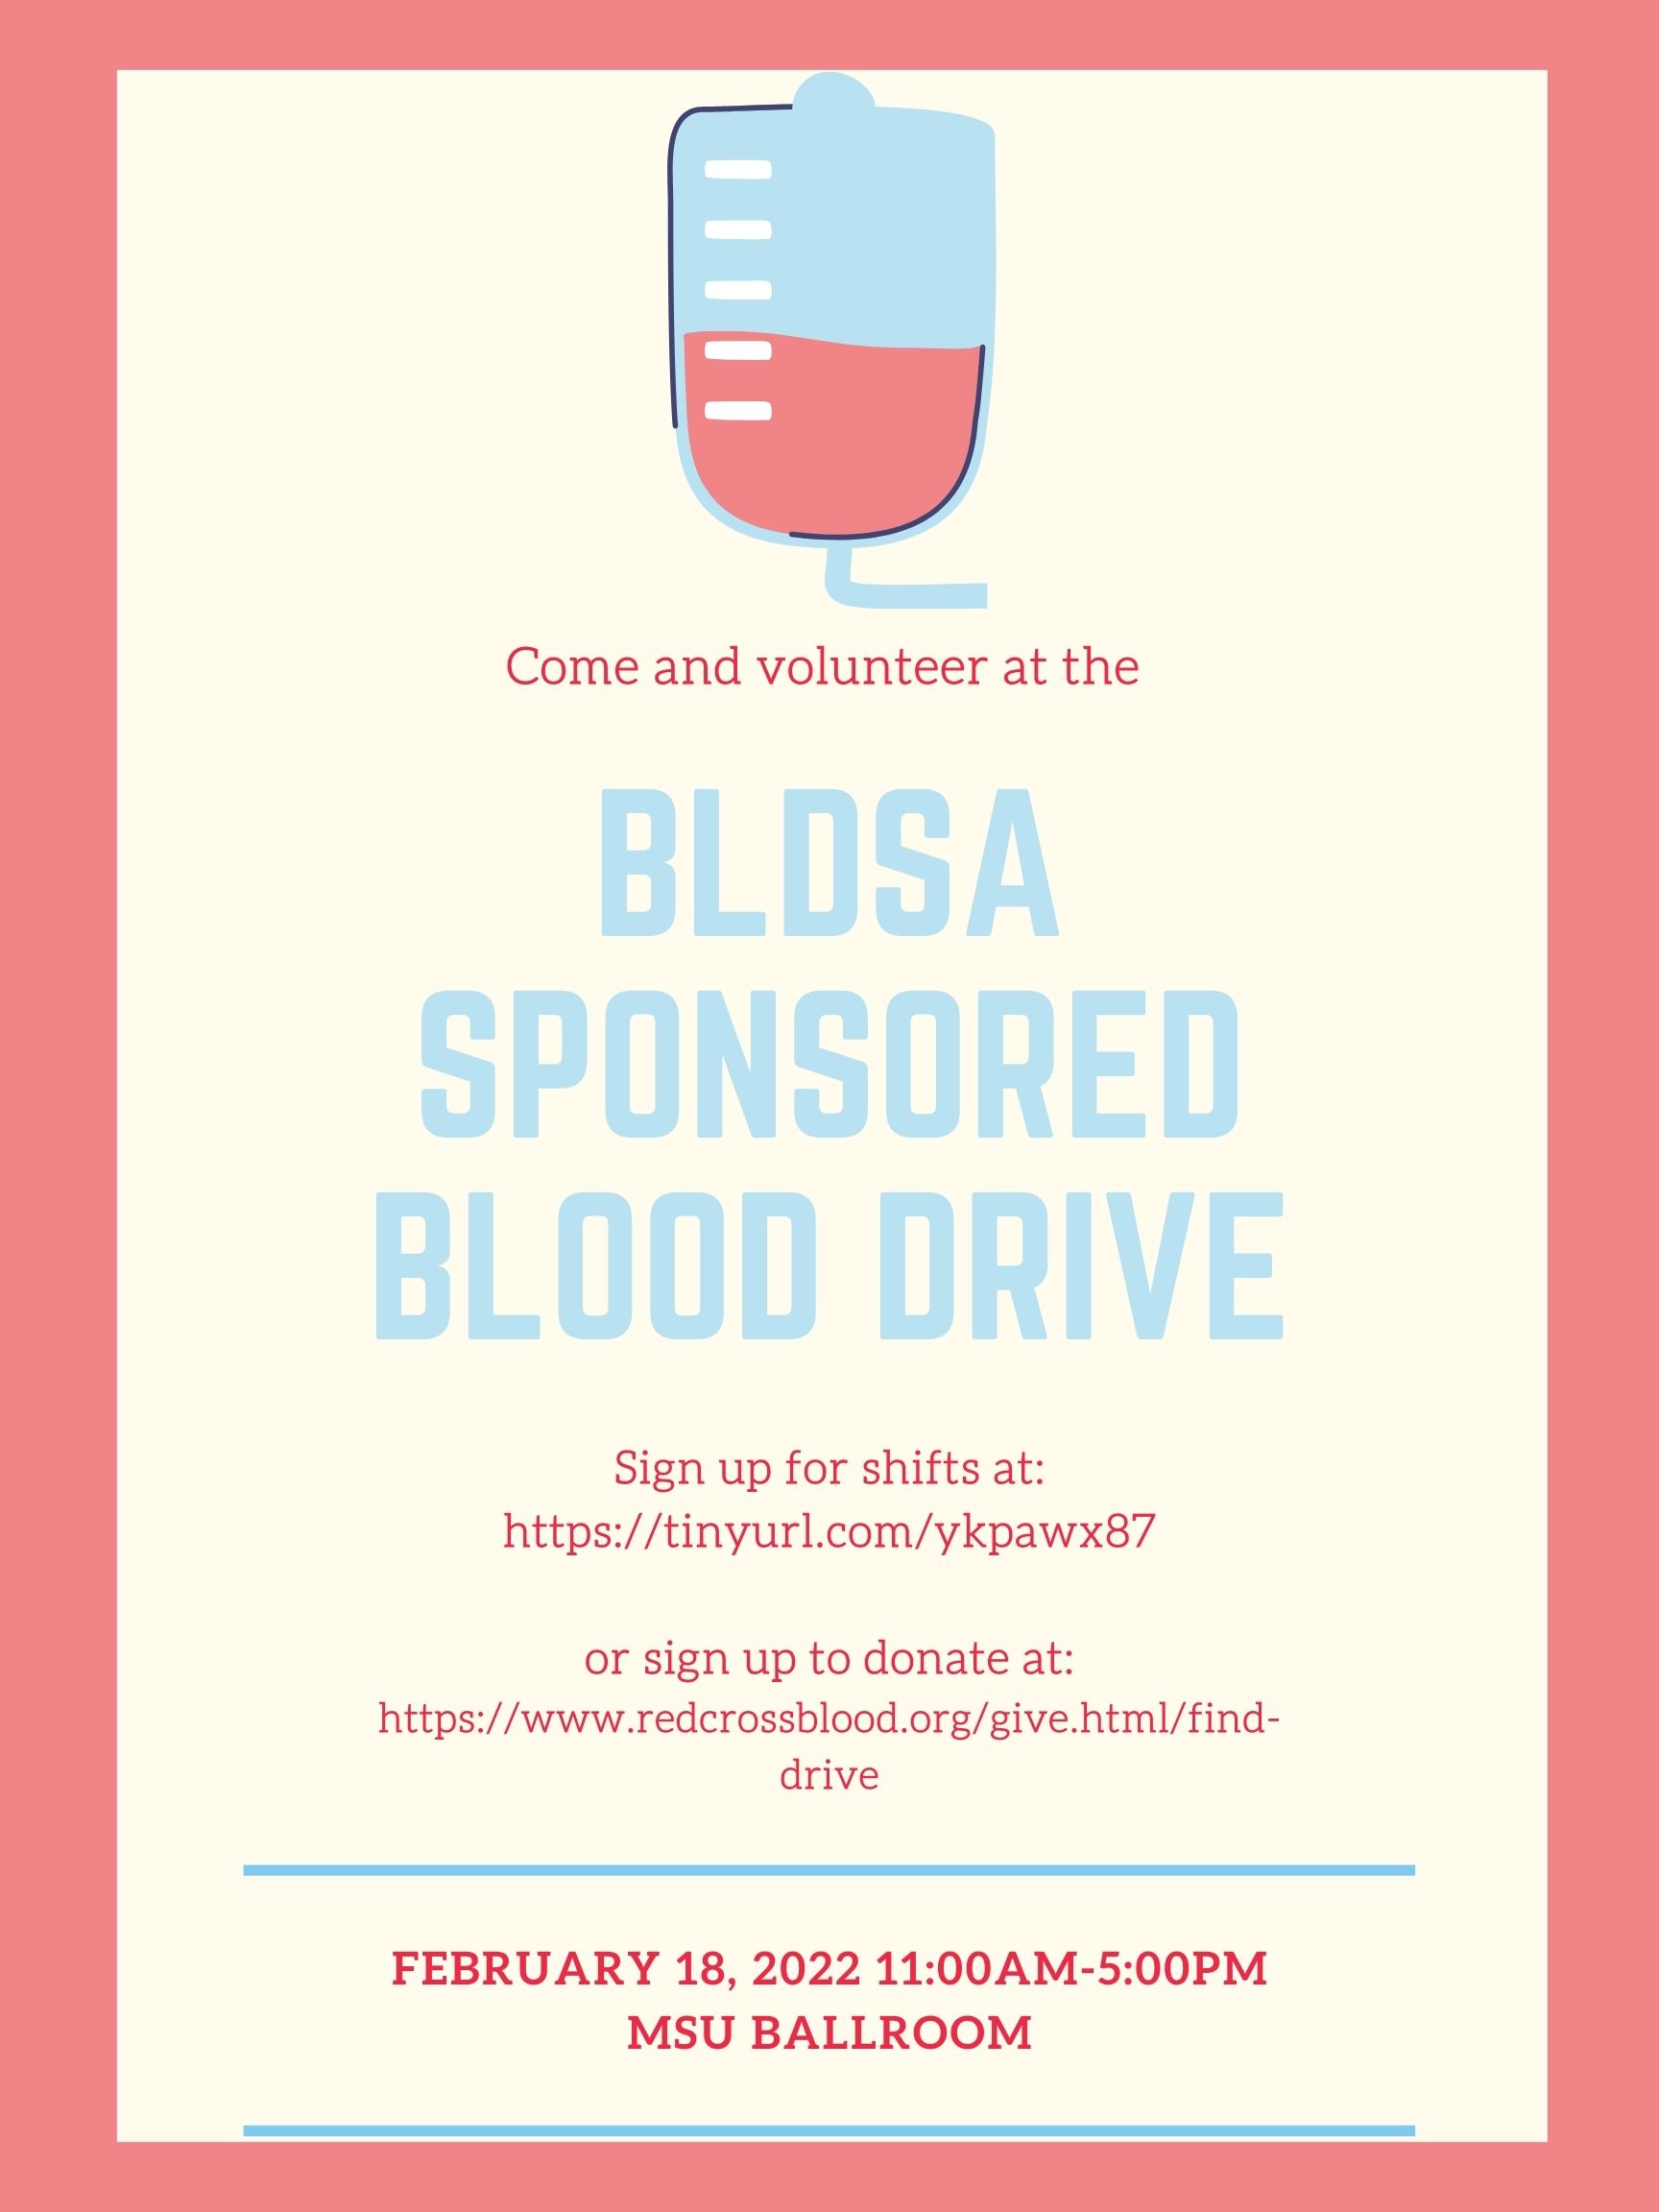 BLDSA sponsored blood drive